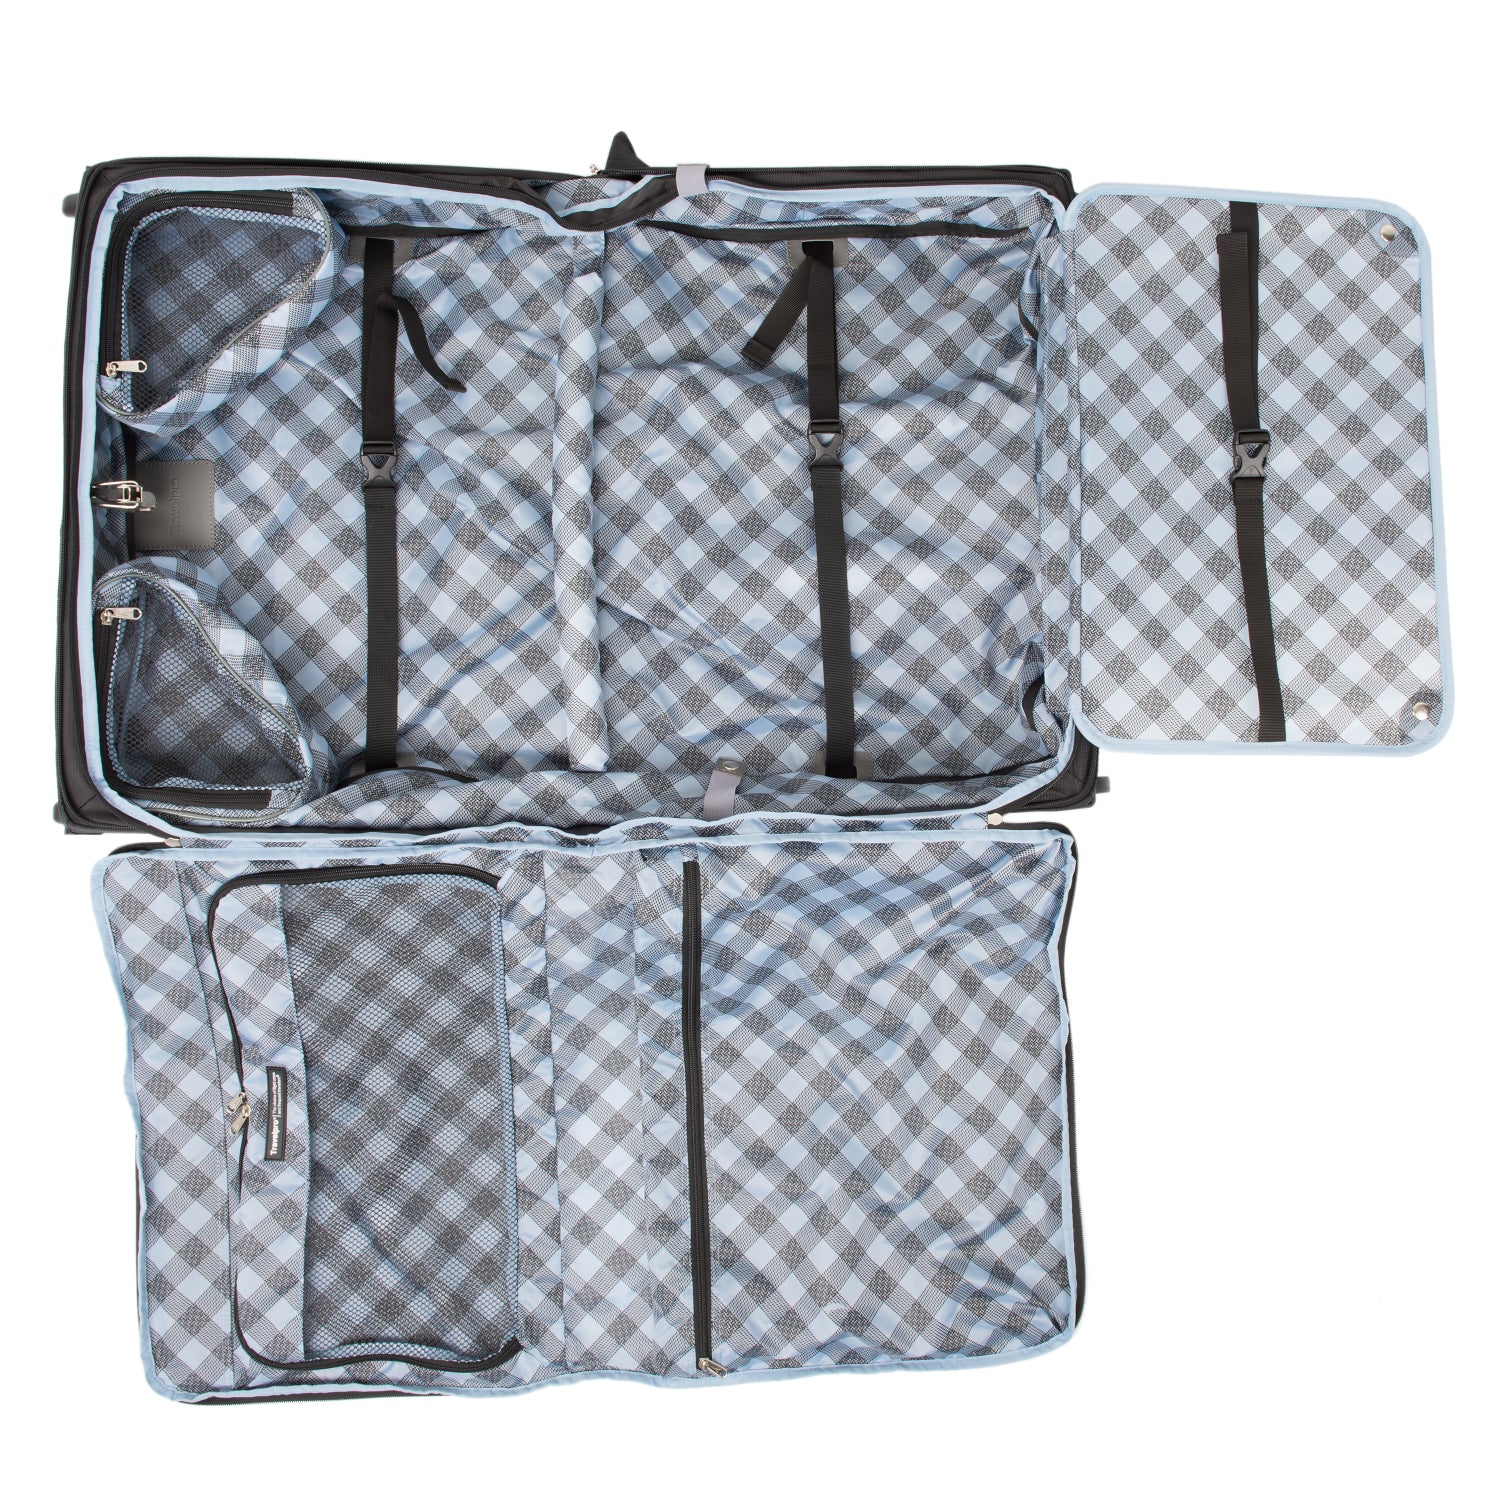 Travelpro Maxlite 5 Carry-On Rolling Garment Bag